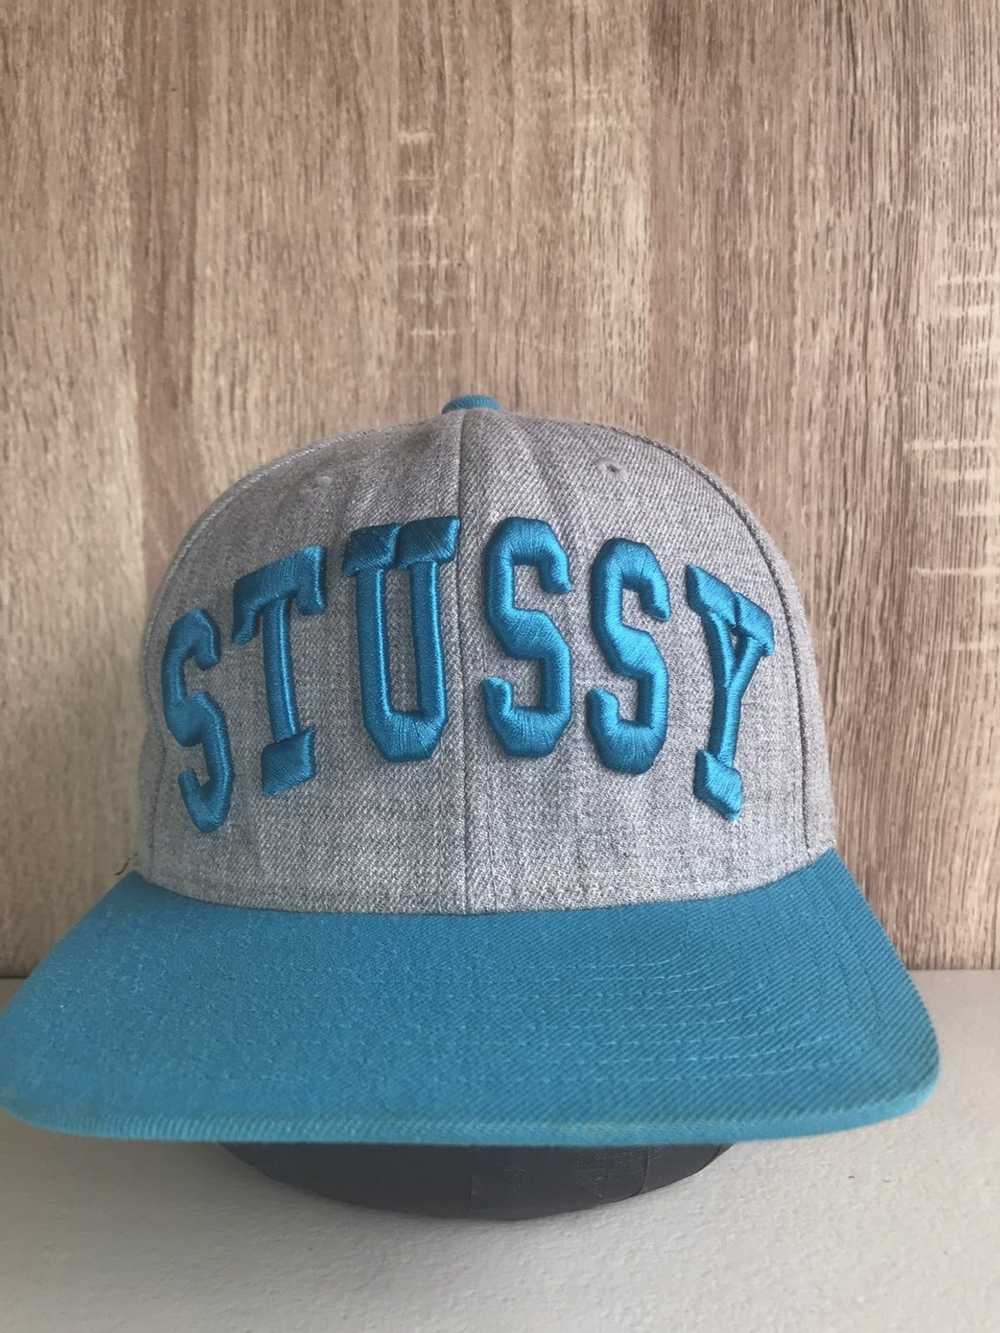 Stussy Stussy x Starter - image 2